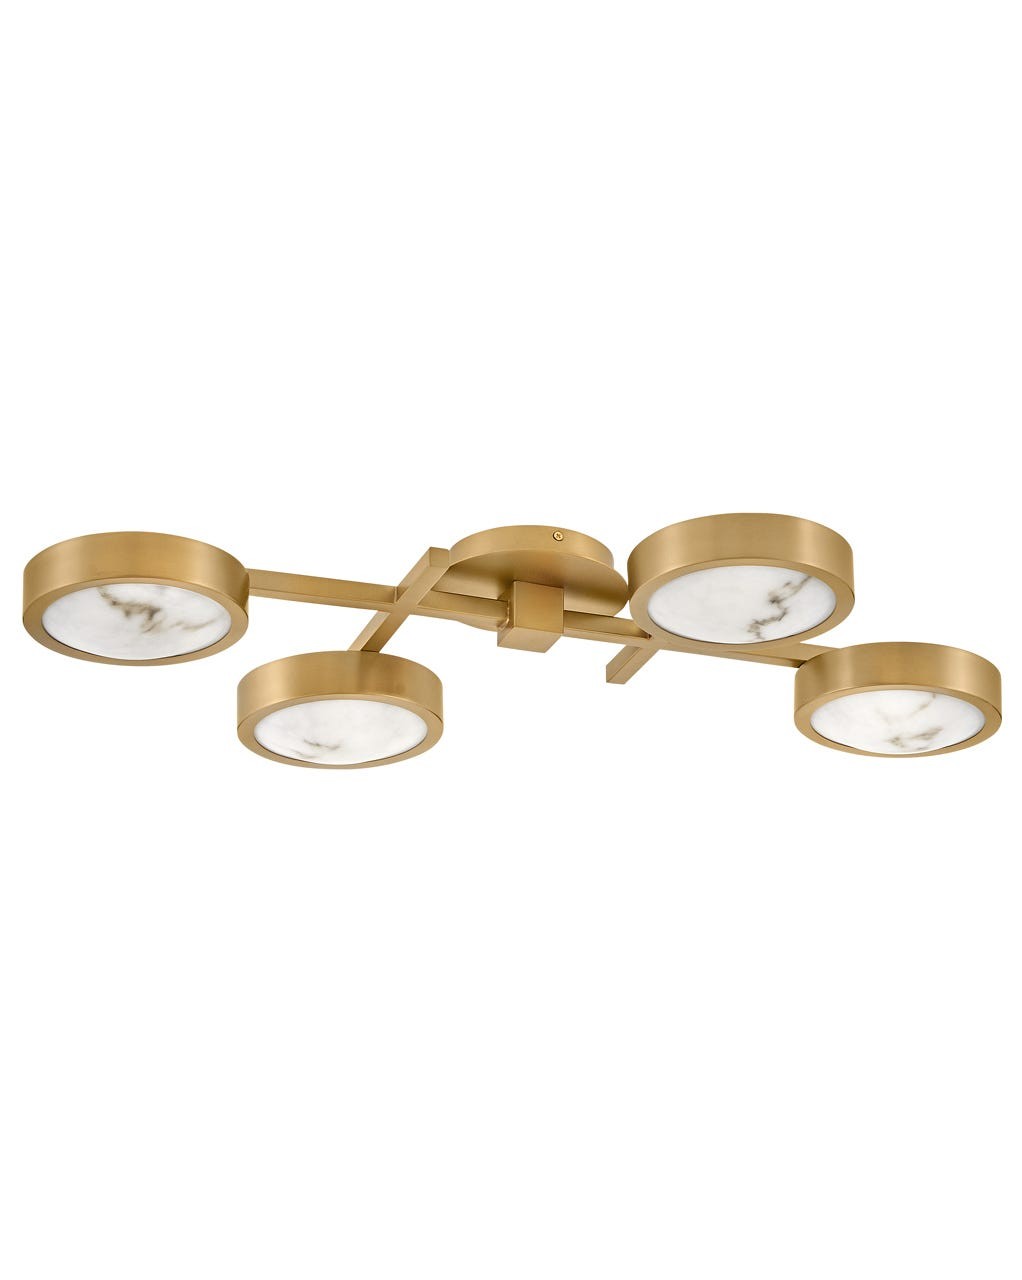 Fredrick Ramond - FR31013LCB - LED Flush Mount - Cava - Lacquered Brass